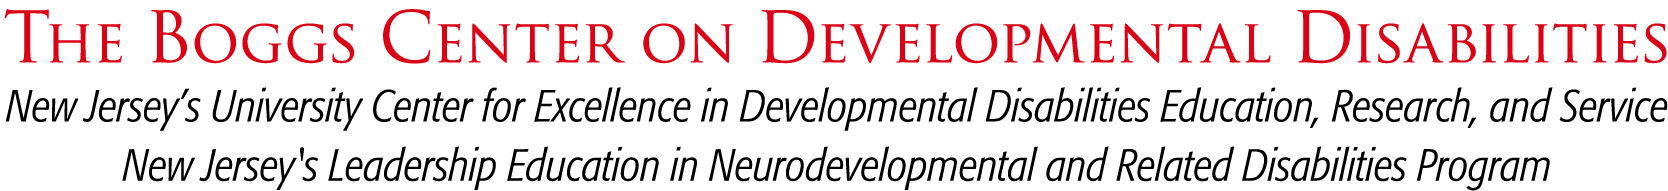 The Boggs Center on Developmental Disabilities logo